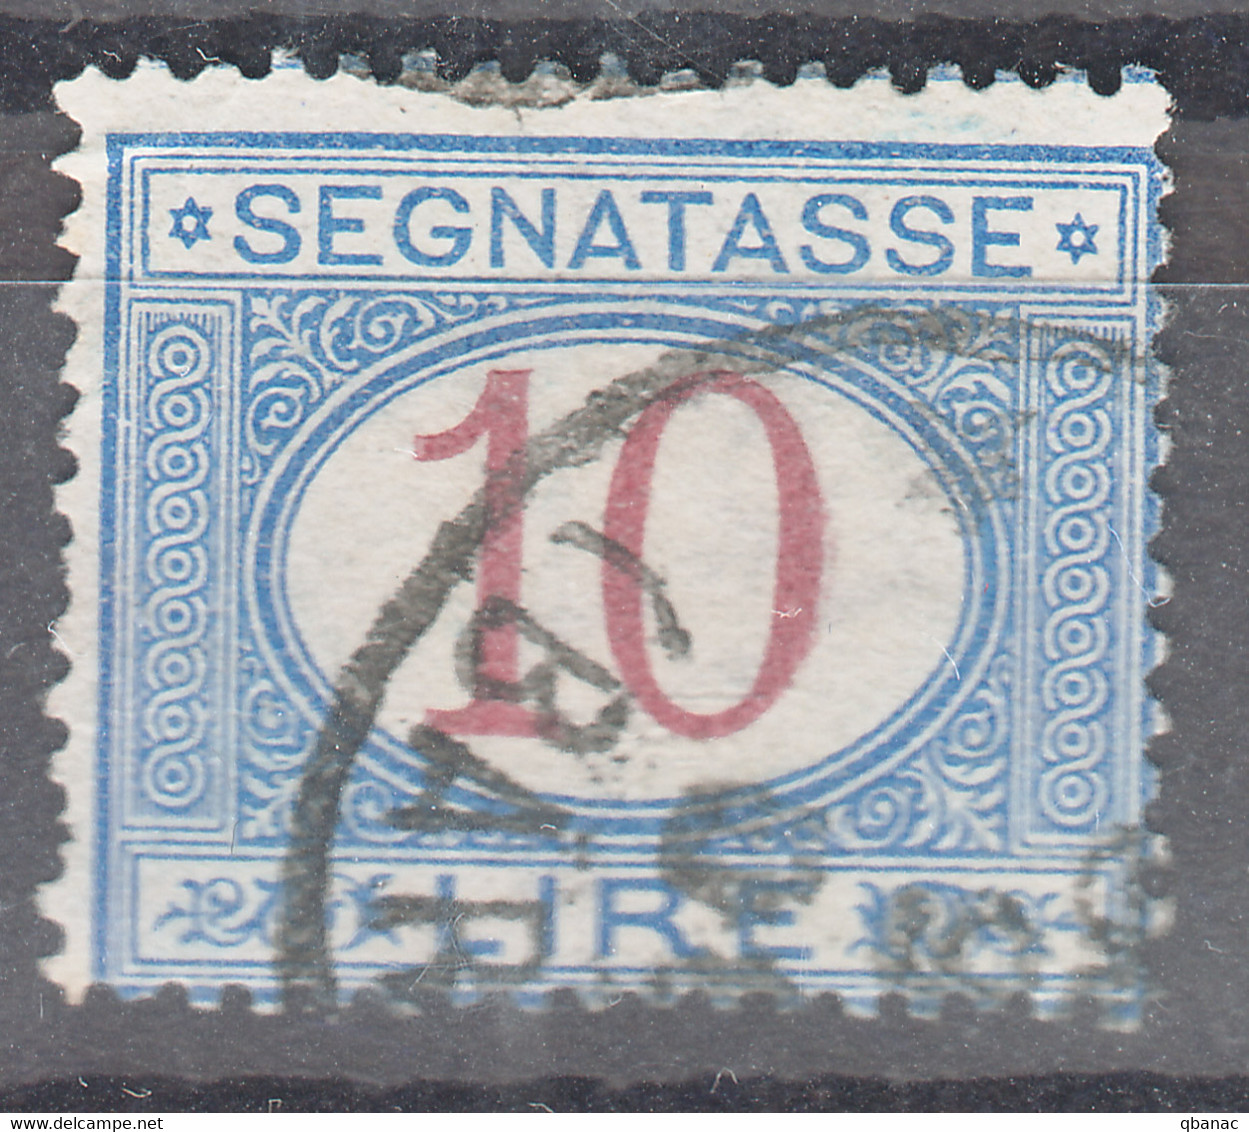 Italy 1870 Porto Segnatasse Sassone#14 Mi#14, 10 Lire, Used - Taxe